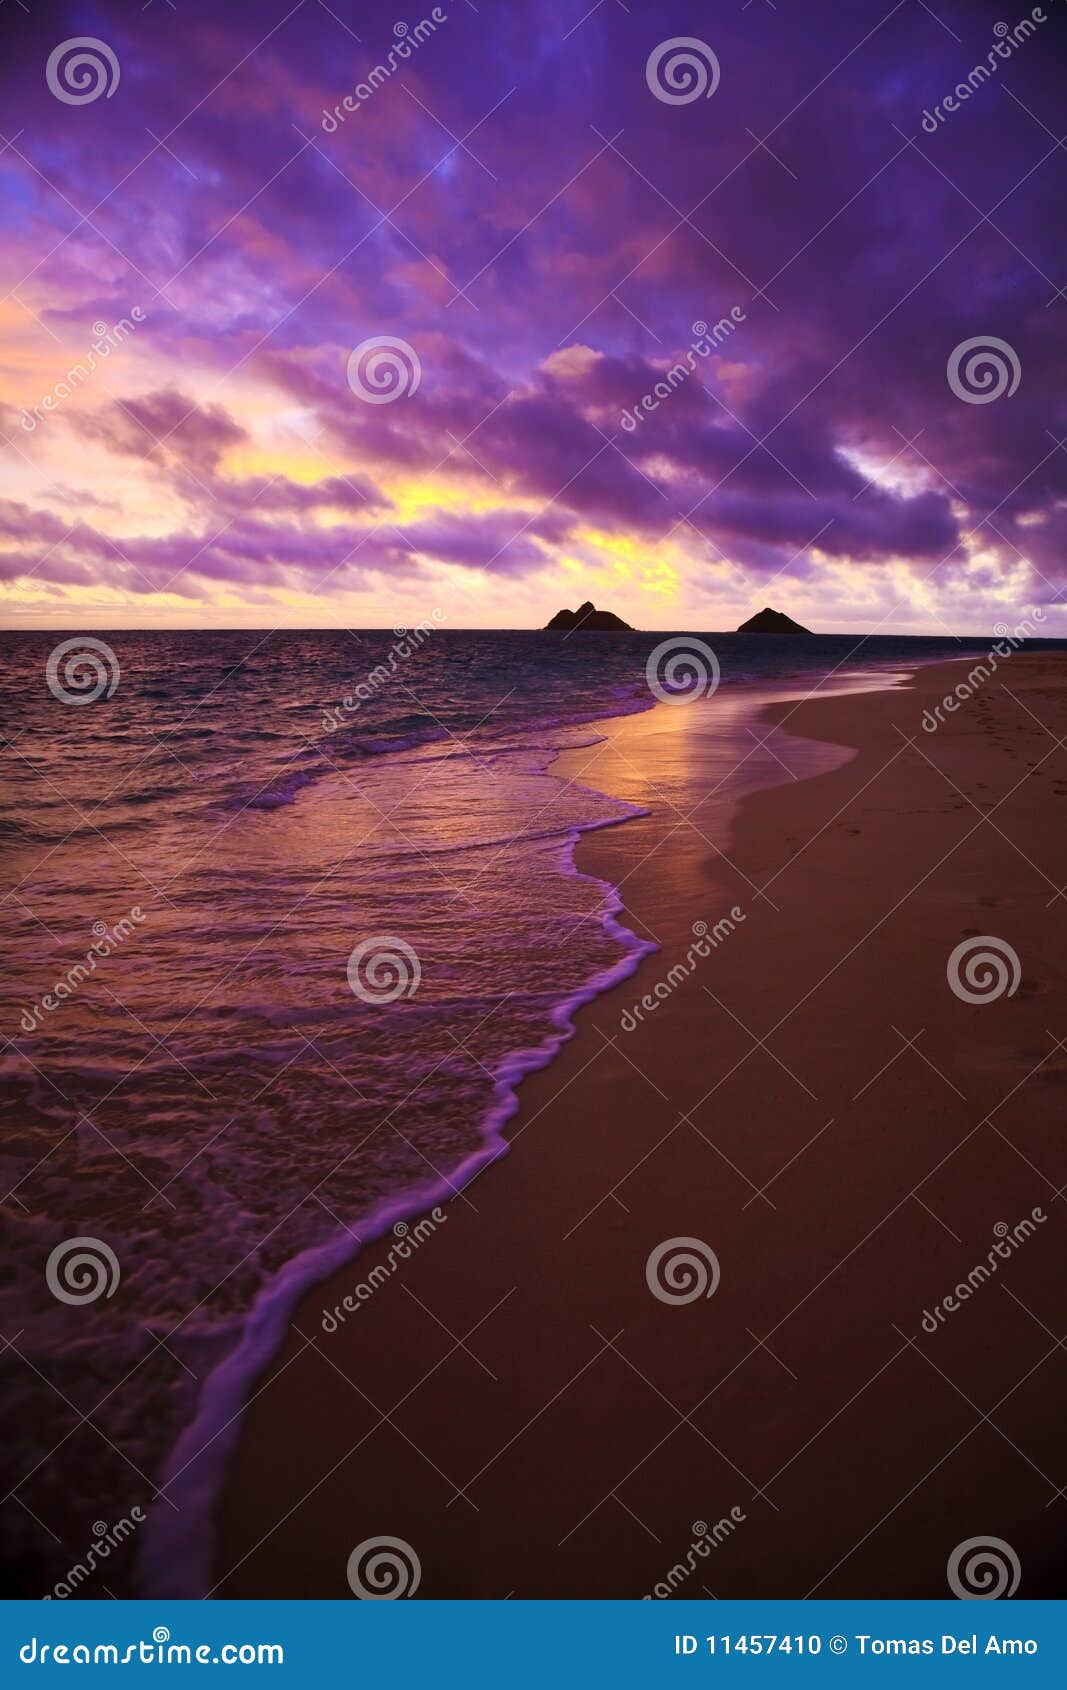 daybreak at lanikai beach in hawaii